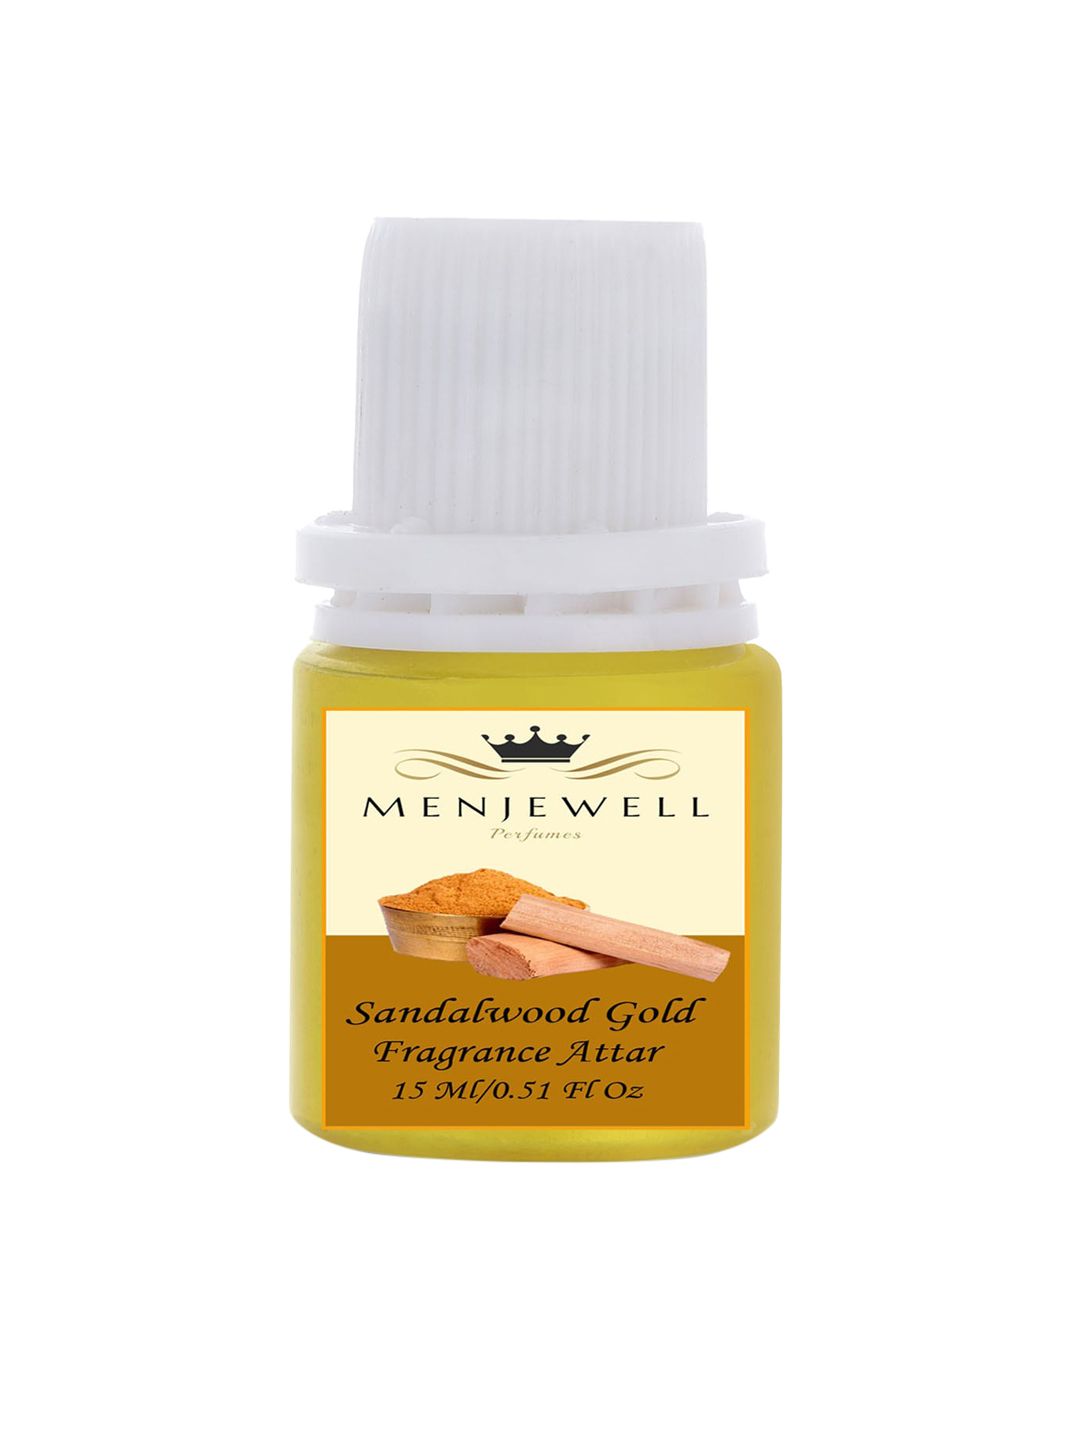 Menjewell Sandalwood Gold Fragrance Long Lasting Attar 15ml Price in India